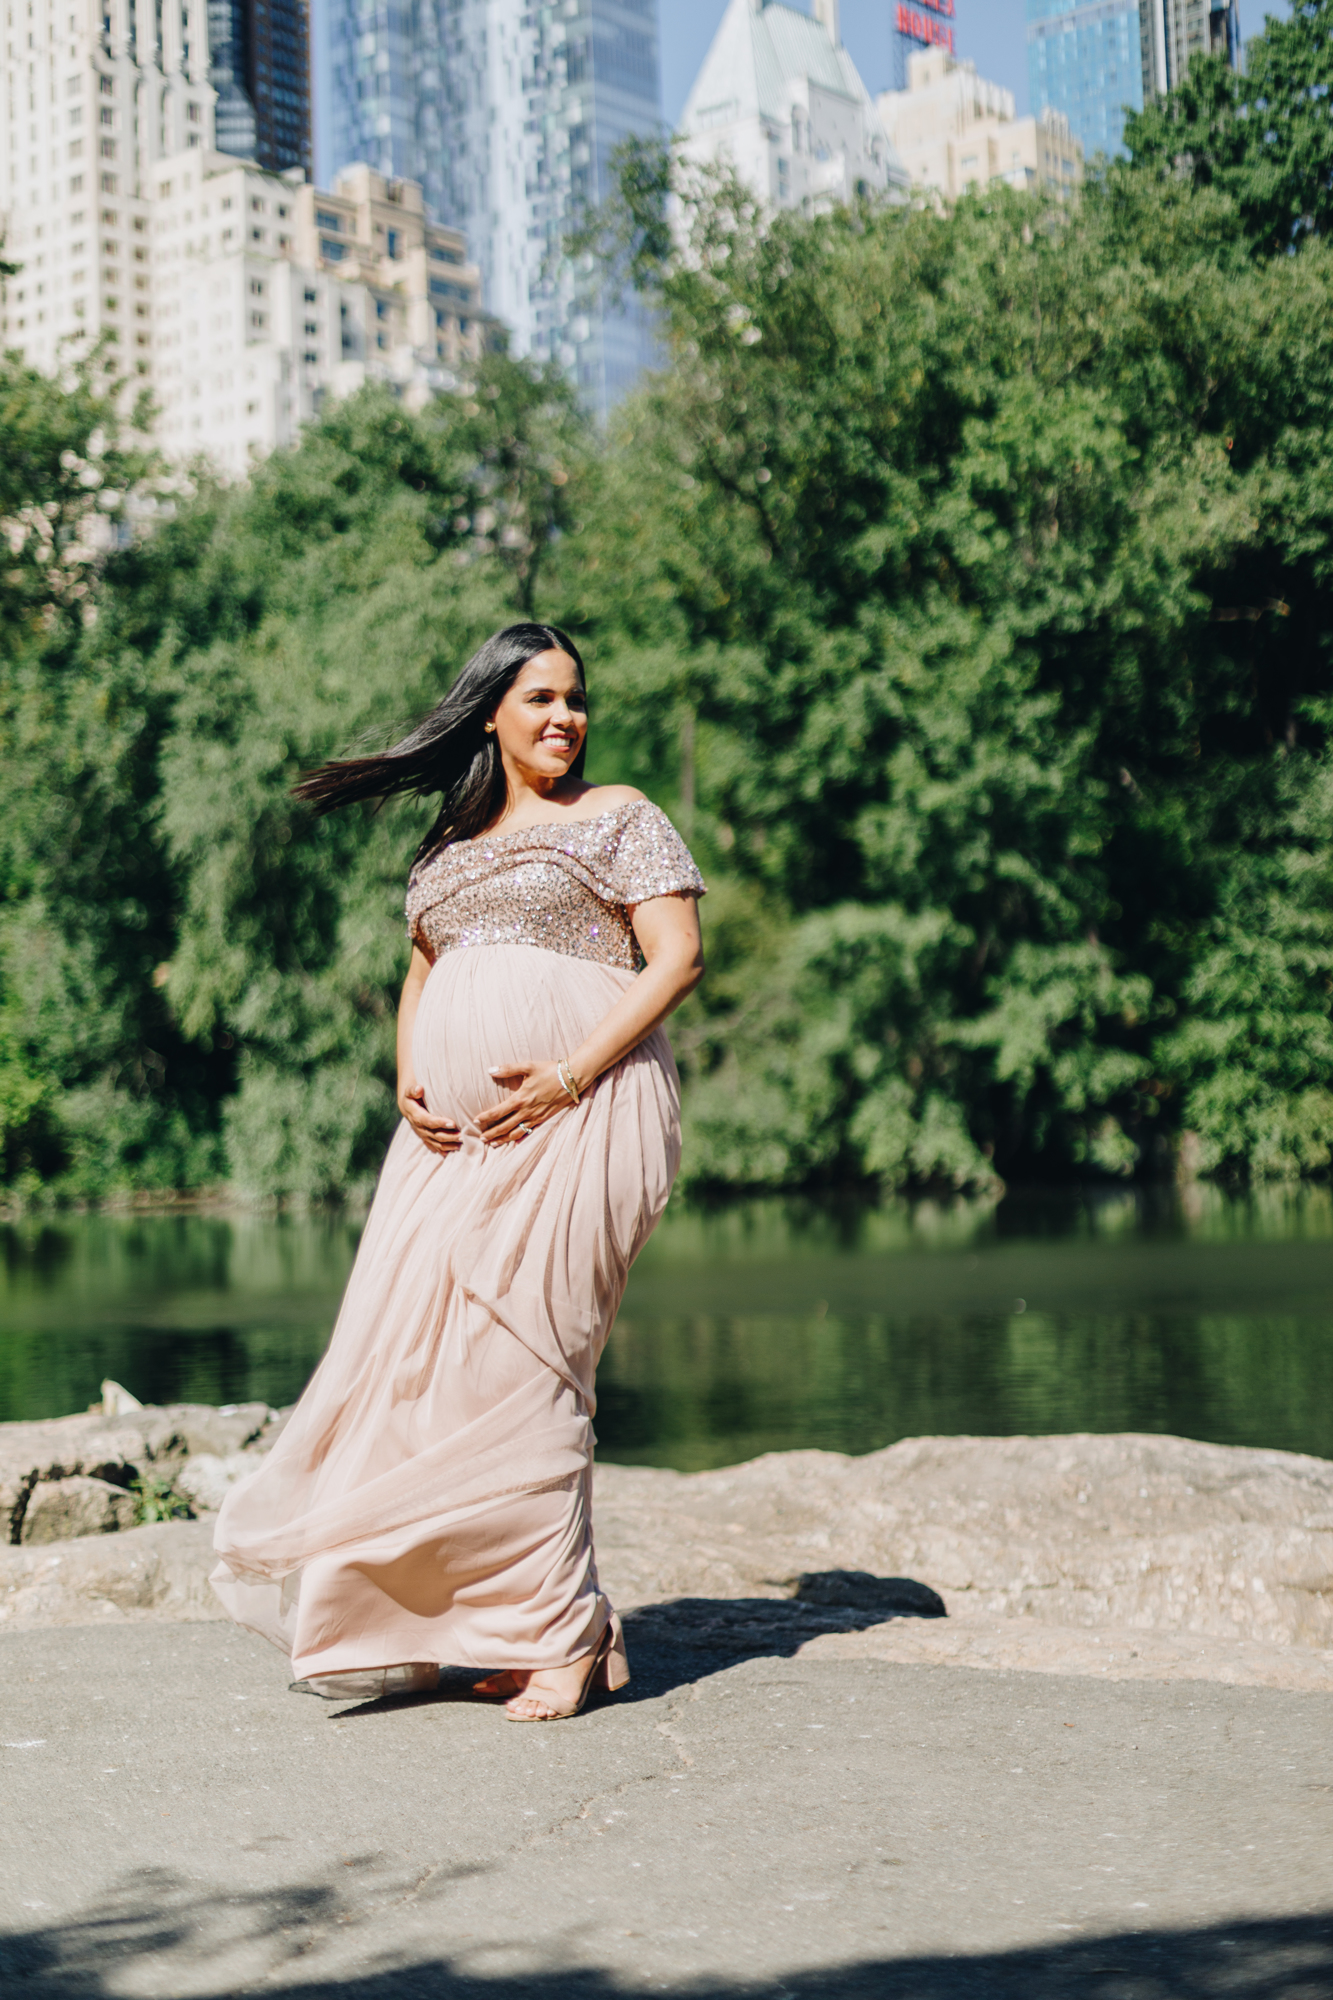 Joyous Central Park Maternity Photos